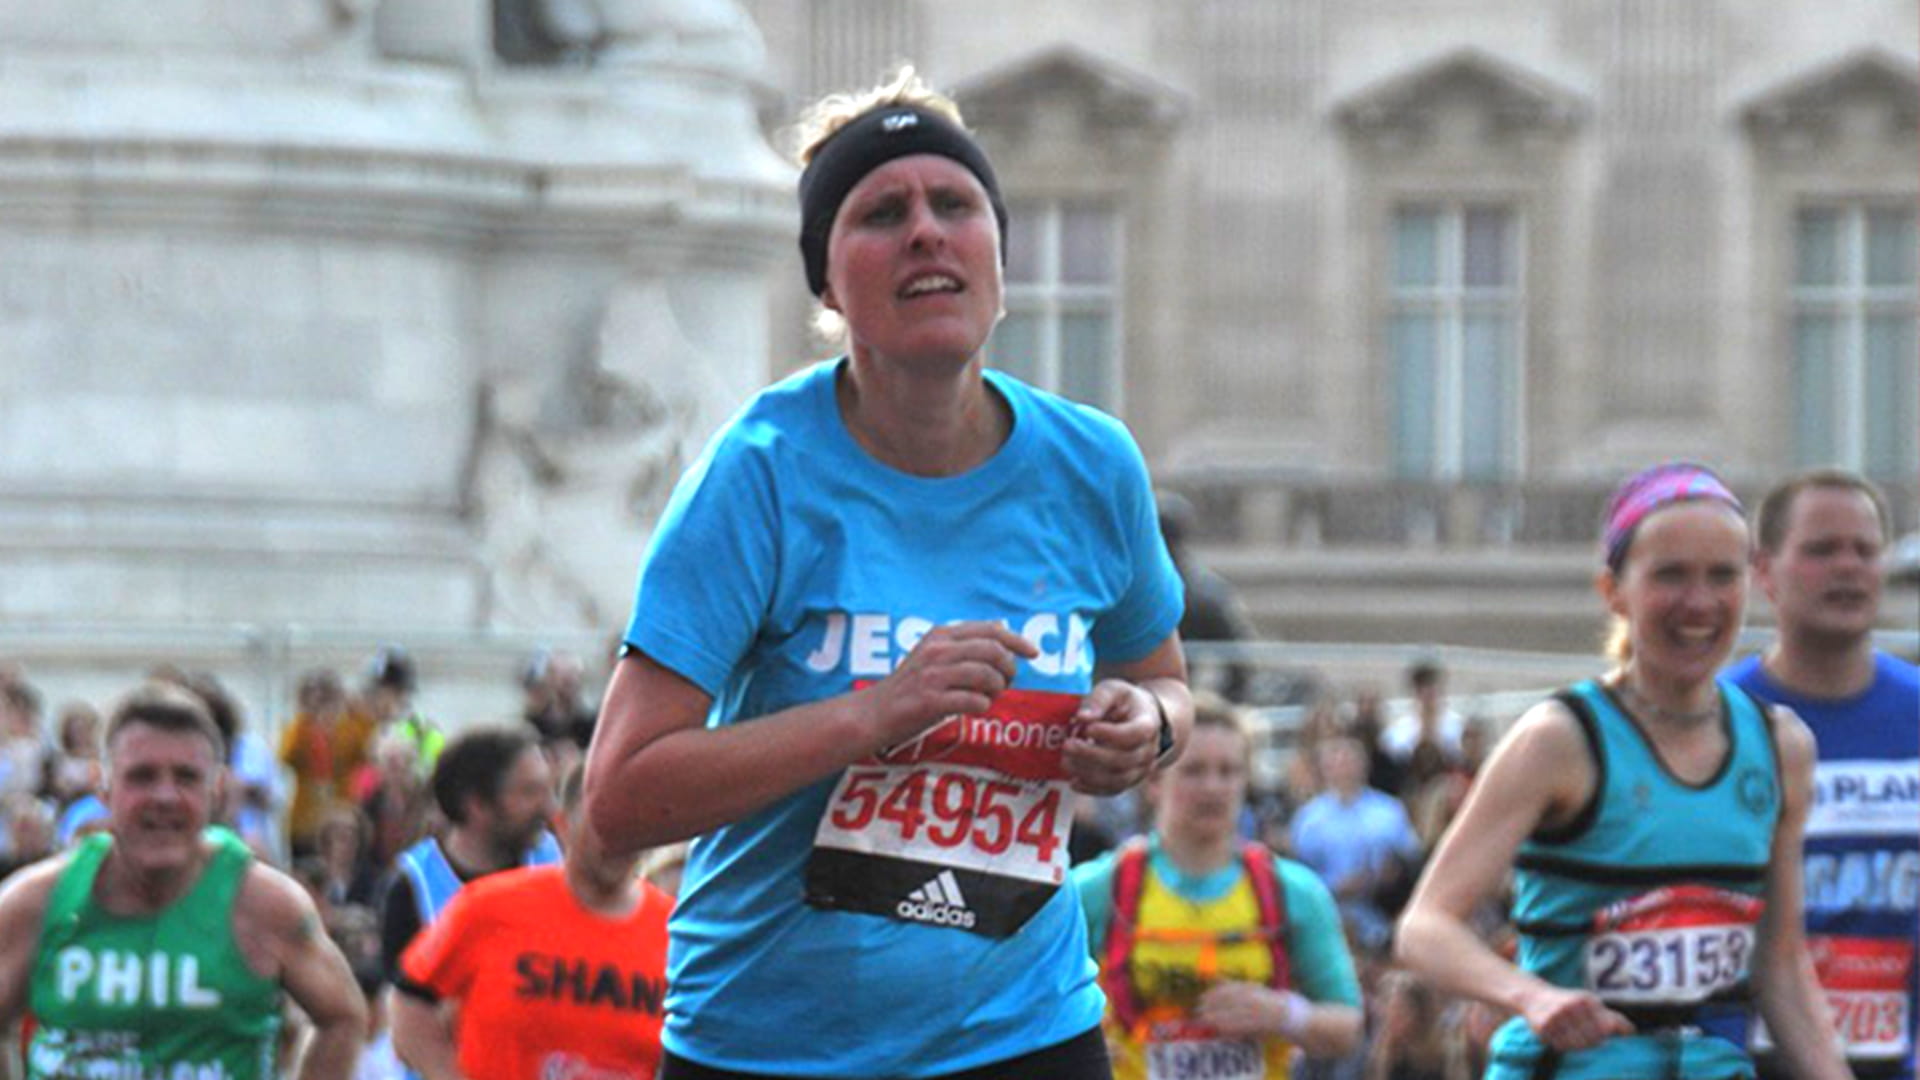 Jessica Hepburn just about to finish the London Marathon!